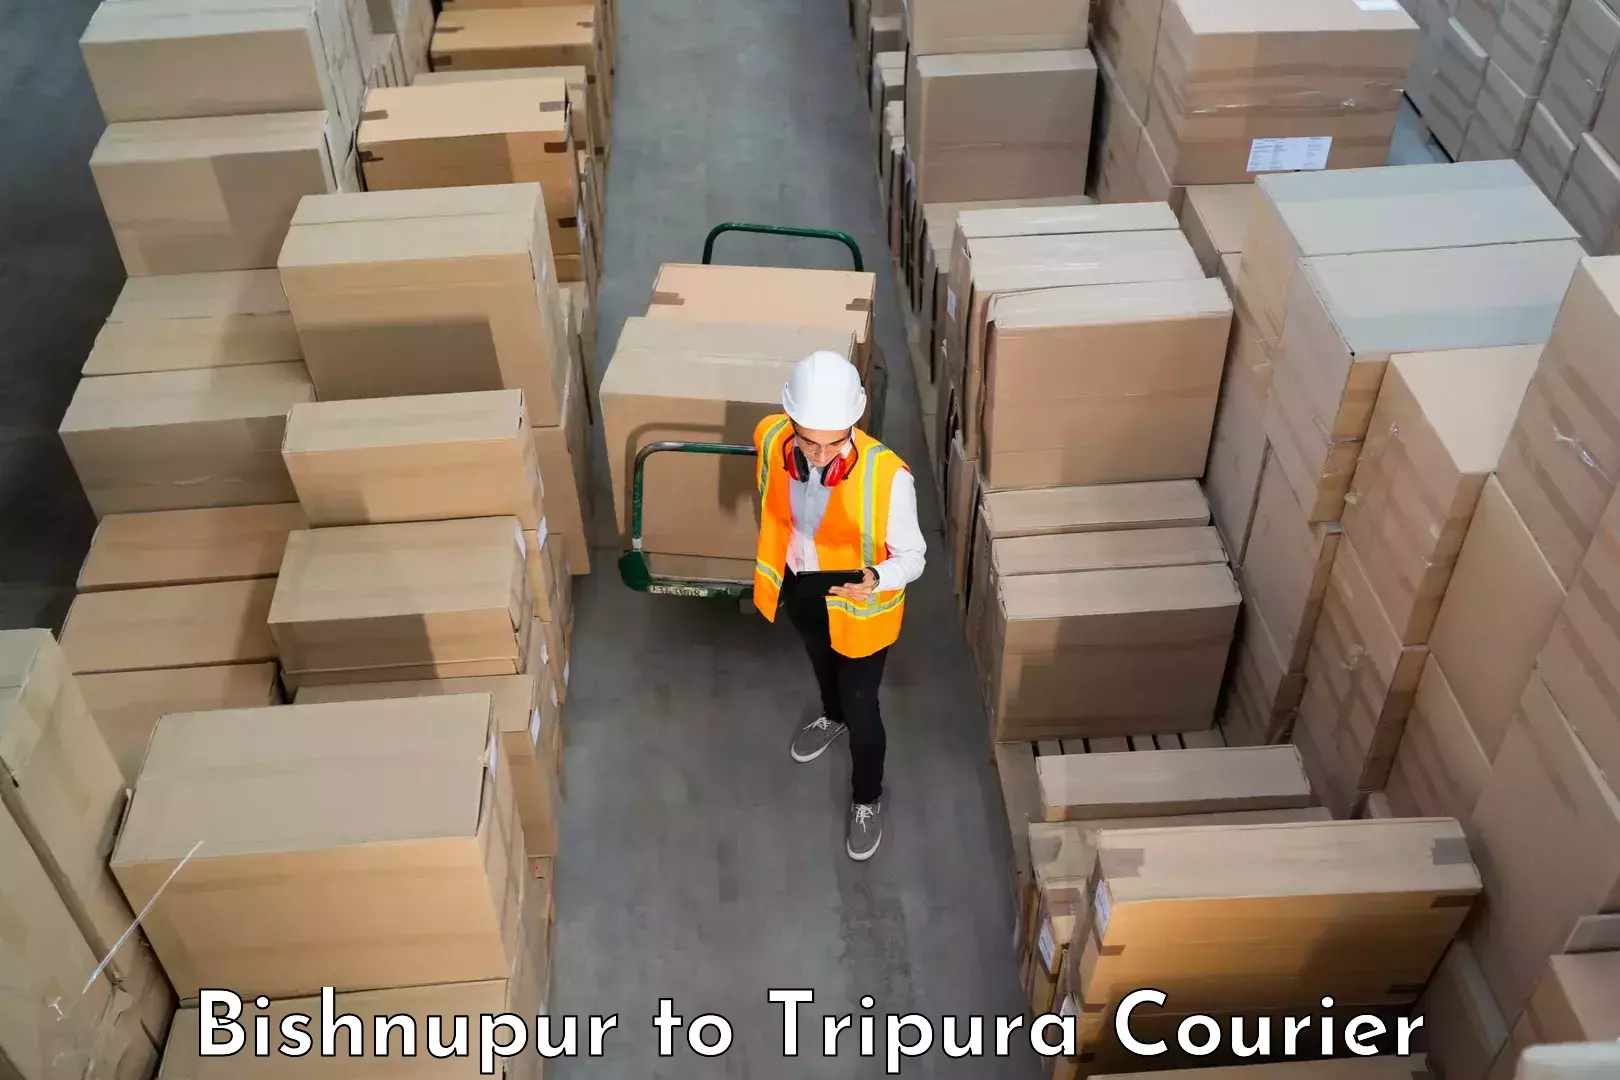 Professional furniture movers in Bishnupur to Khowai